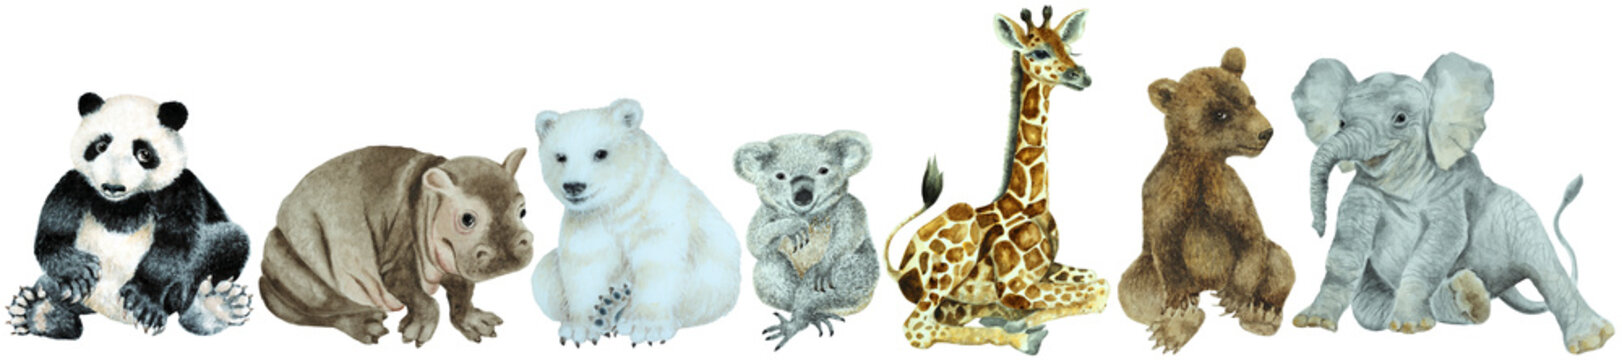 Set of the baby hippo, giraffe, brown bear, koala, polar bear, panda, elephant on a white background, hand drawn watercolor.